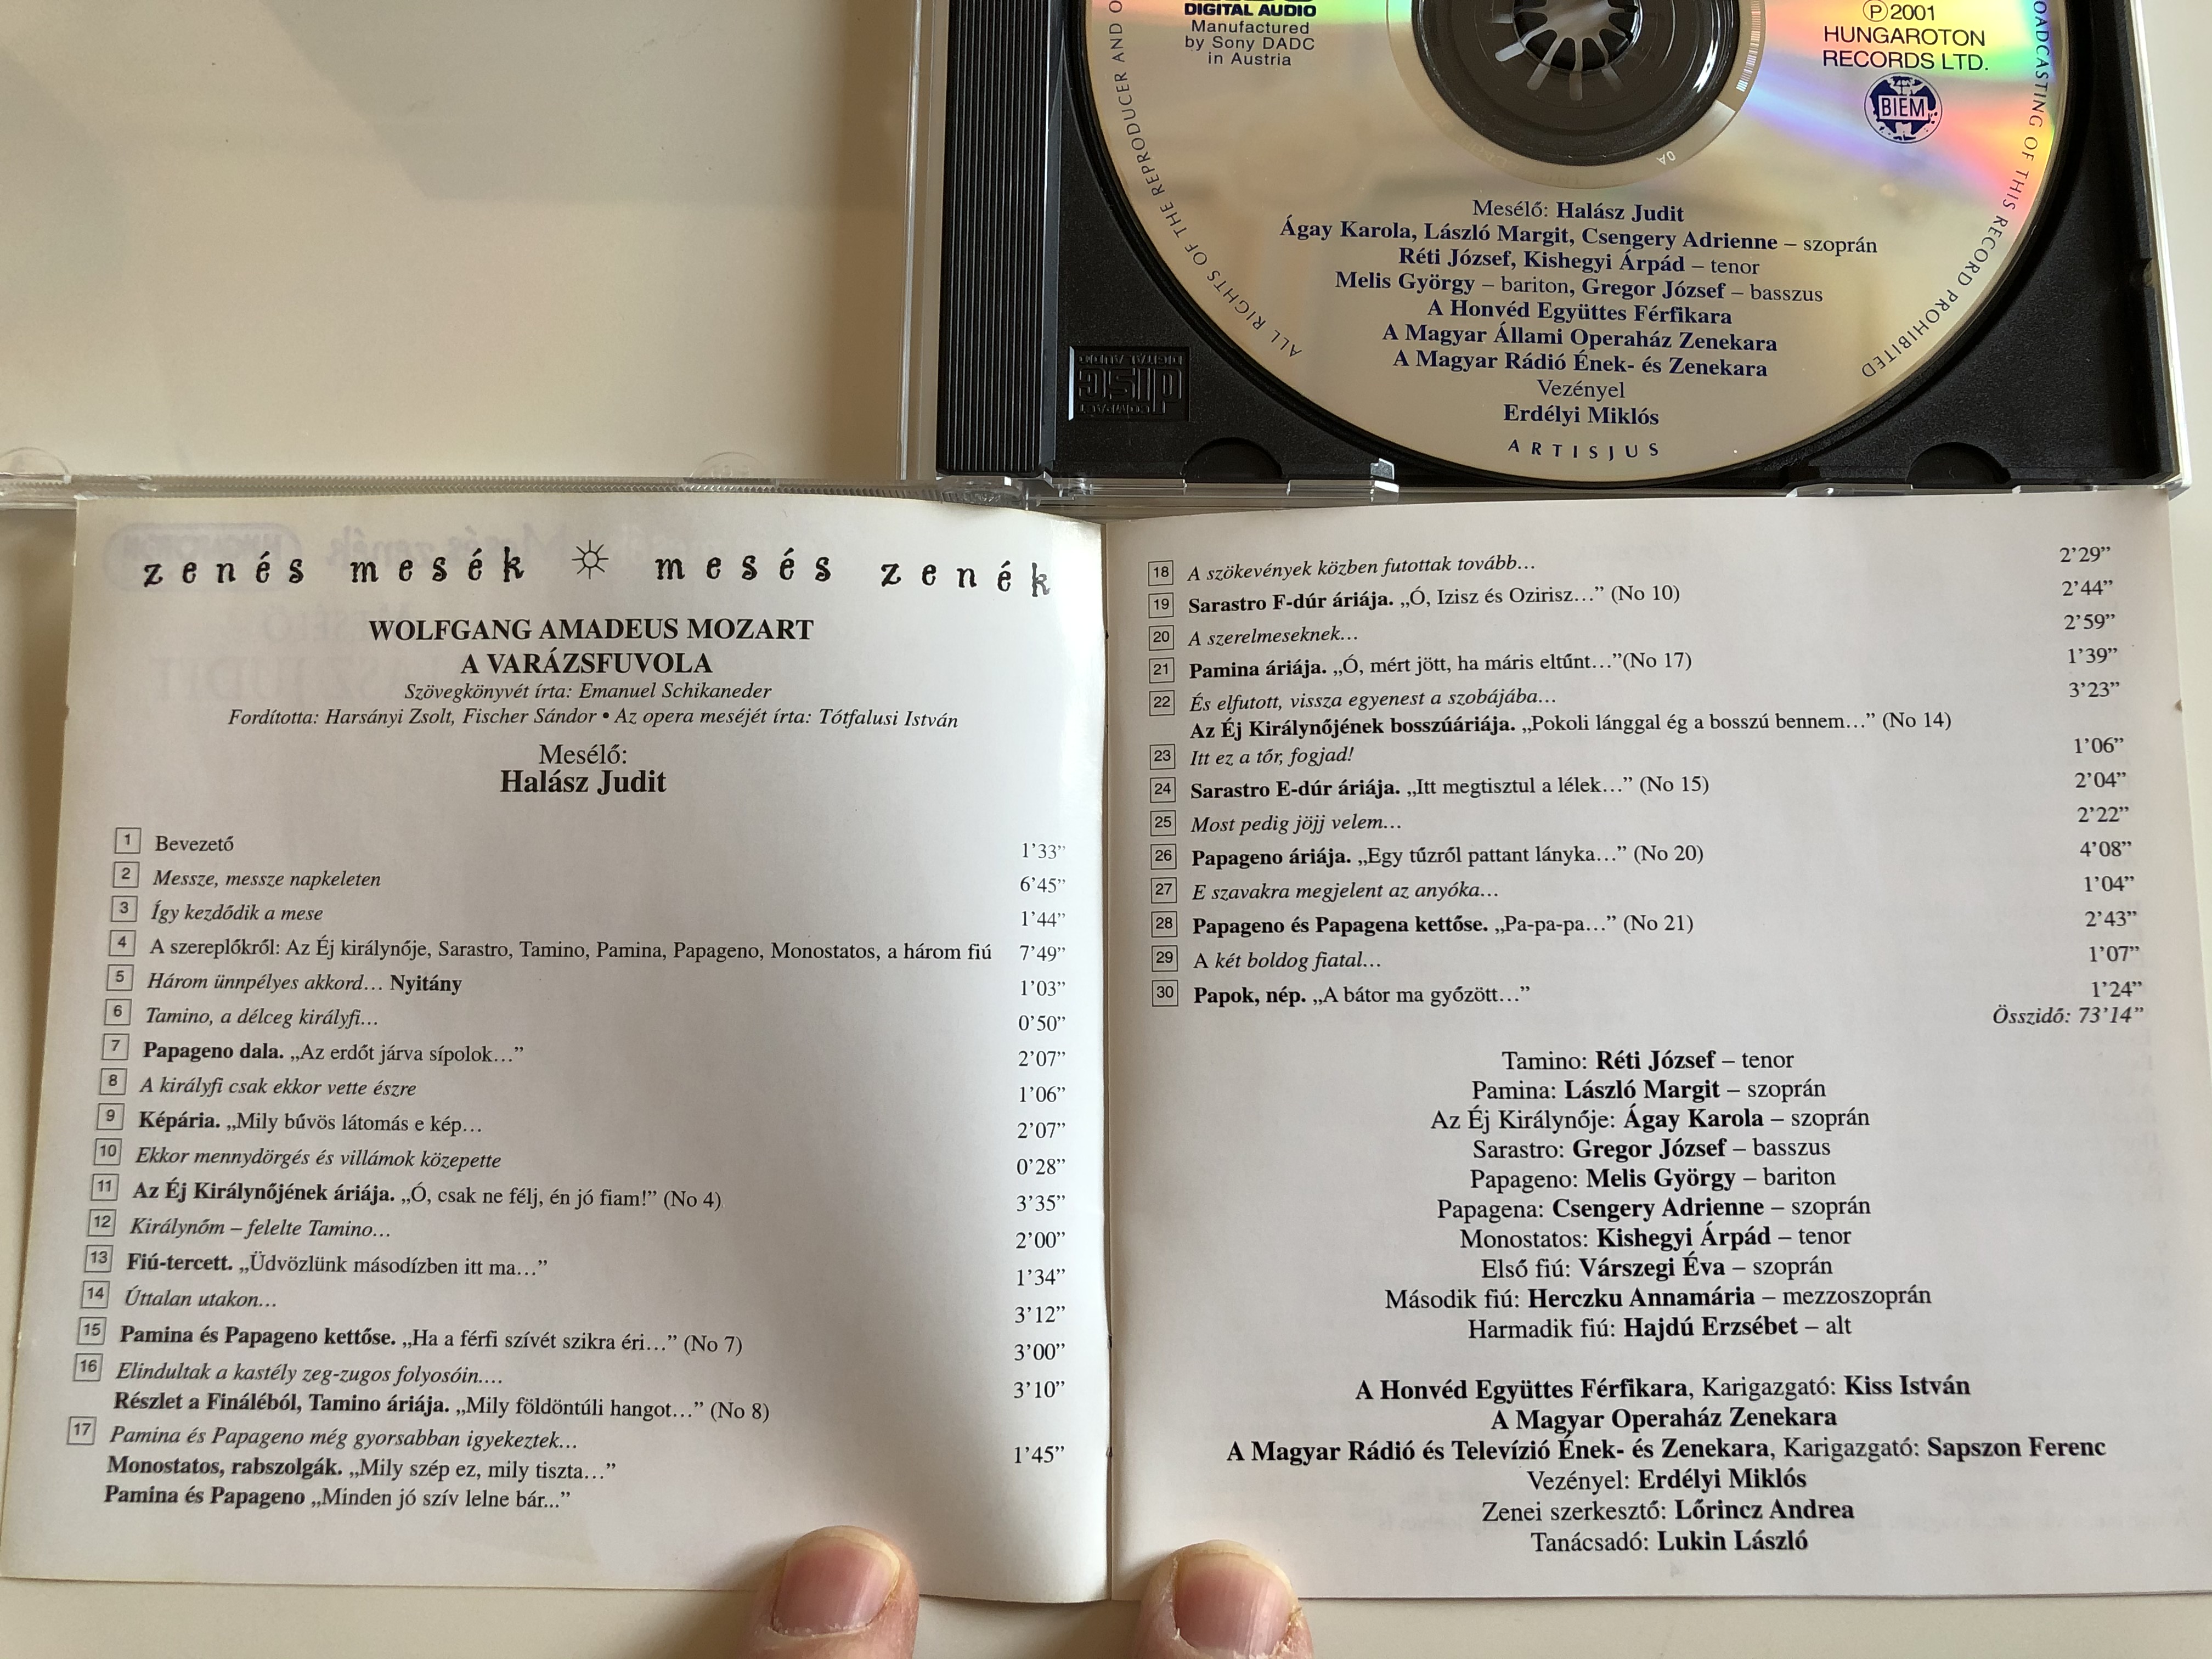 zen-s-mes-k-mes-s-zen-k-mozart-a-var-zsfuvola-meselo-hal-sz-judit-hungaroton-classic-audio-cd-2001-stereo-hcd-19451-2-.jpg